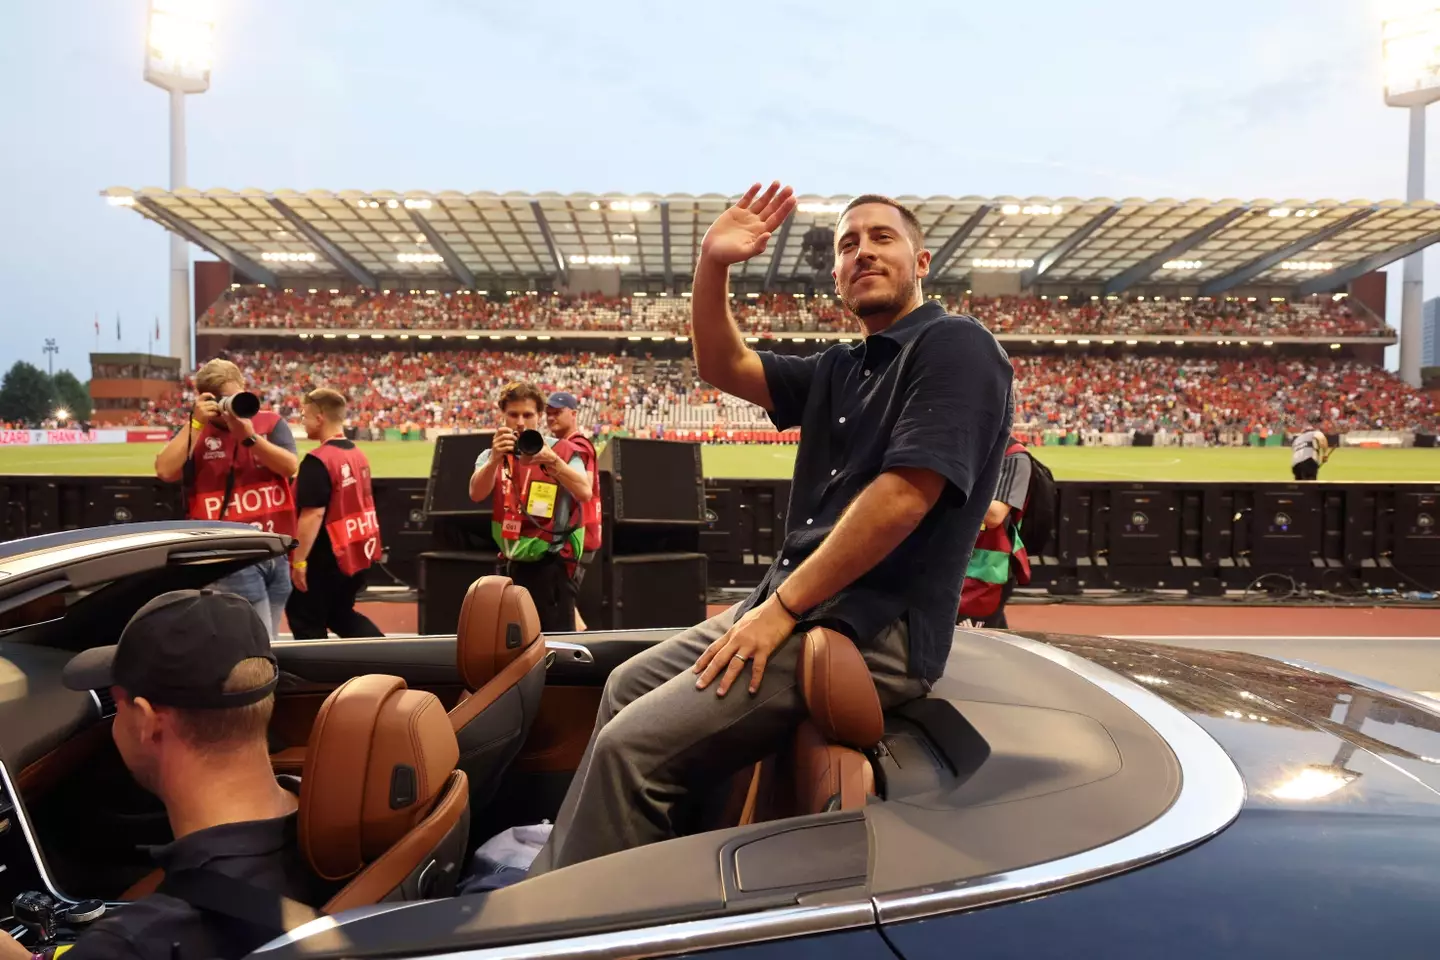 Eden Hazard receives a send-off following his international retirement. Image: Alamy